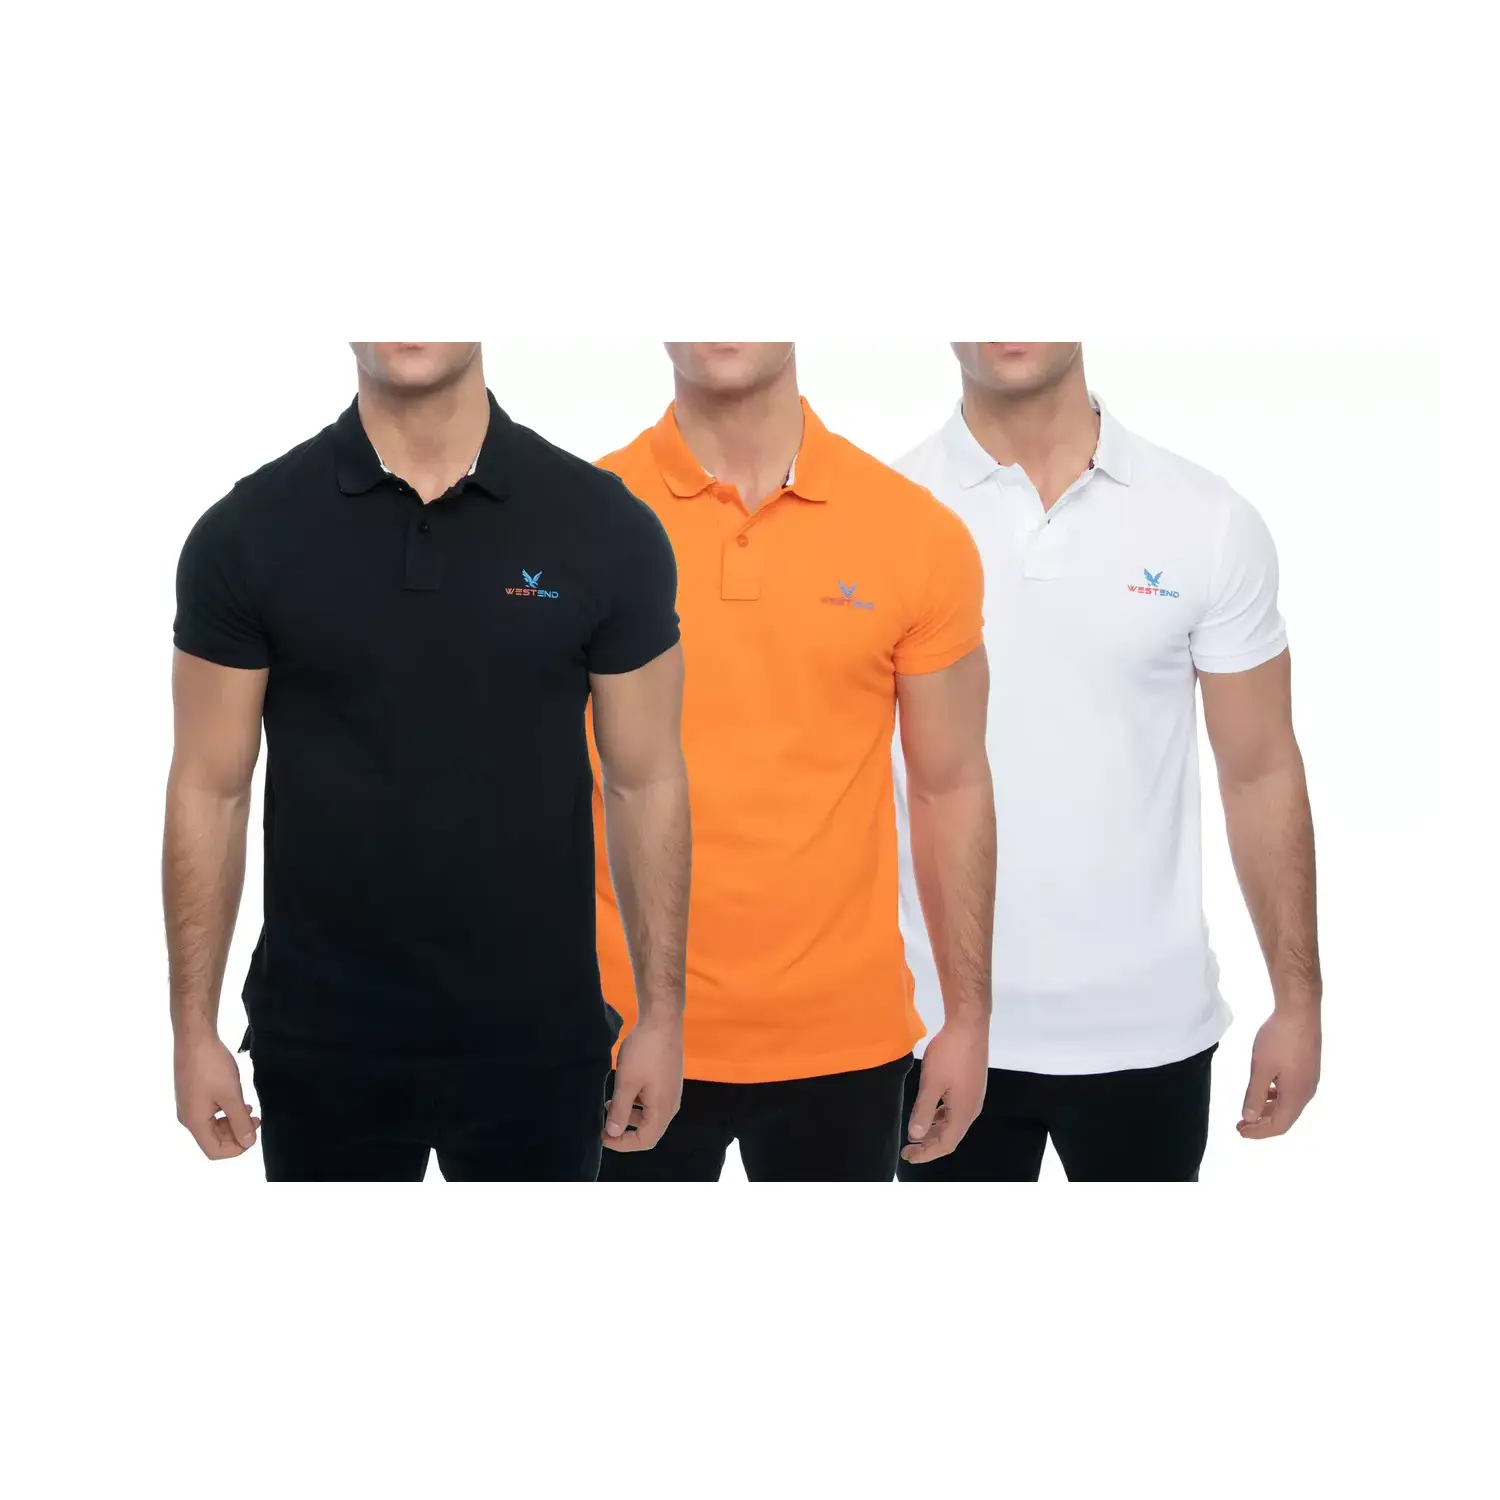 Men's Short Sleeve 100% Cotton Polo Shirts